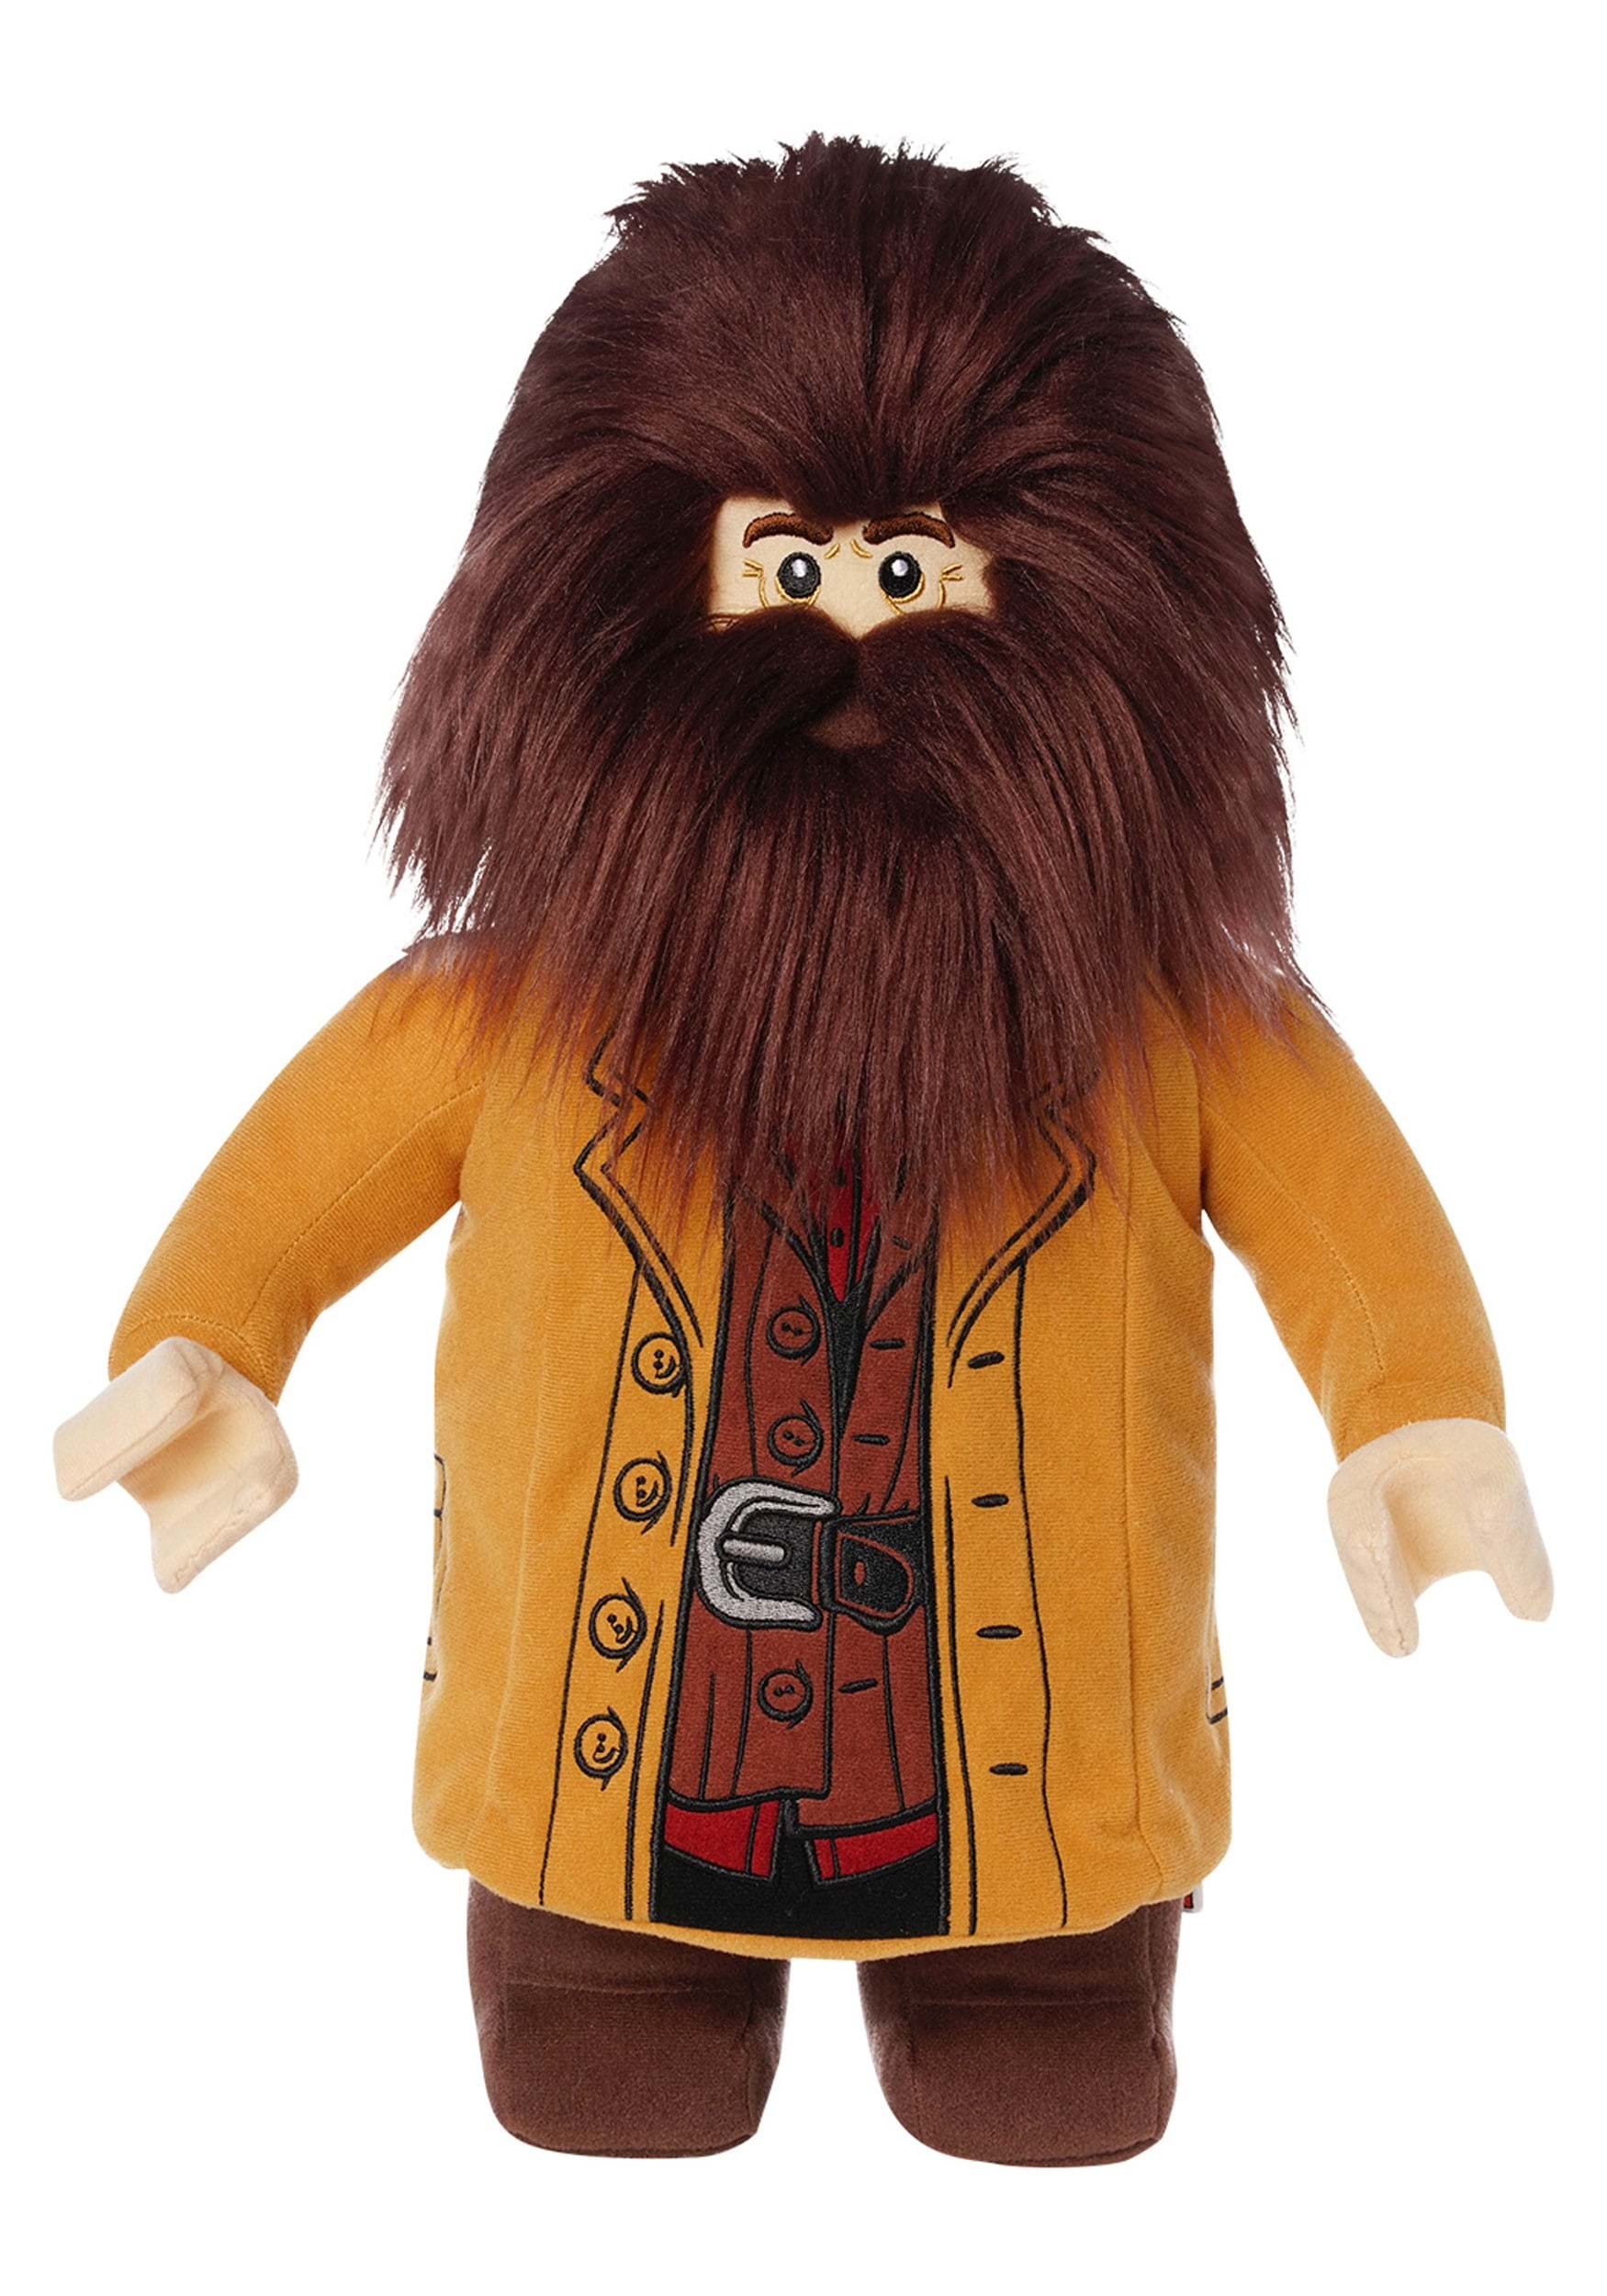 Harry Potter LEGO Hagrid Plush for Kids